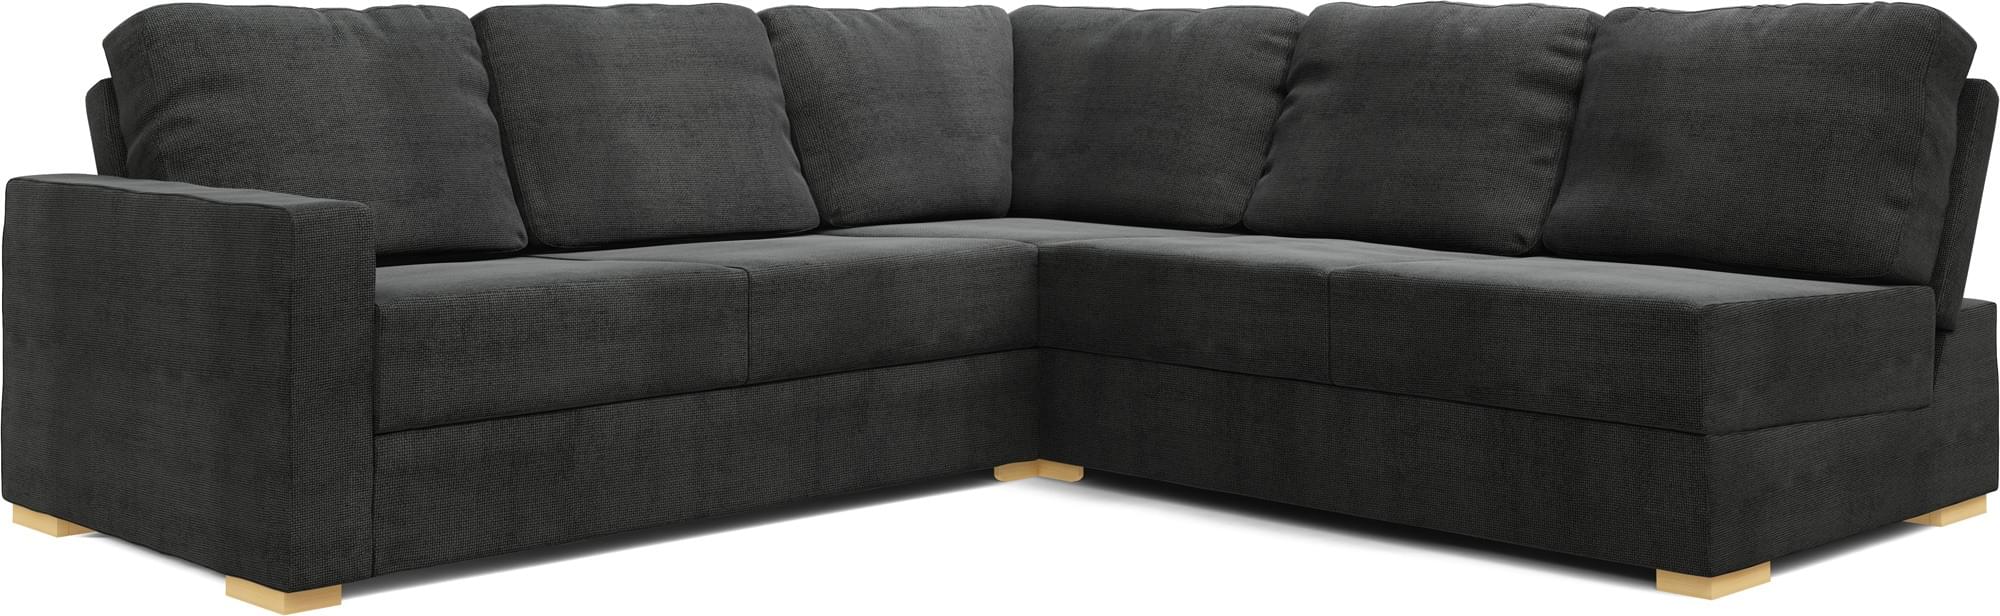 Alda Armless 3X3 Double Sofa Bed